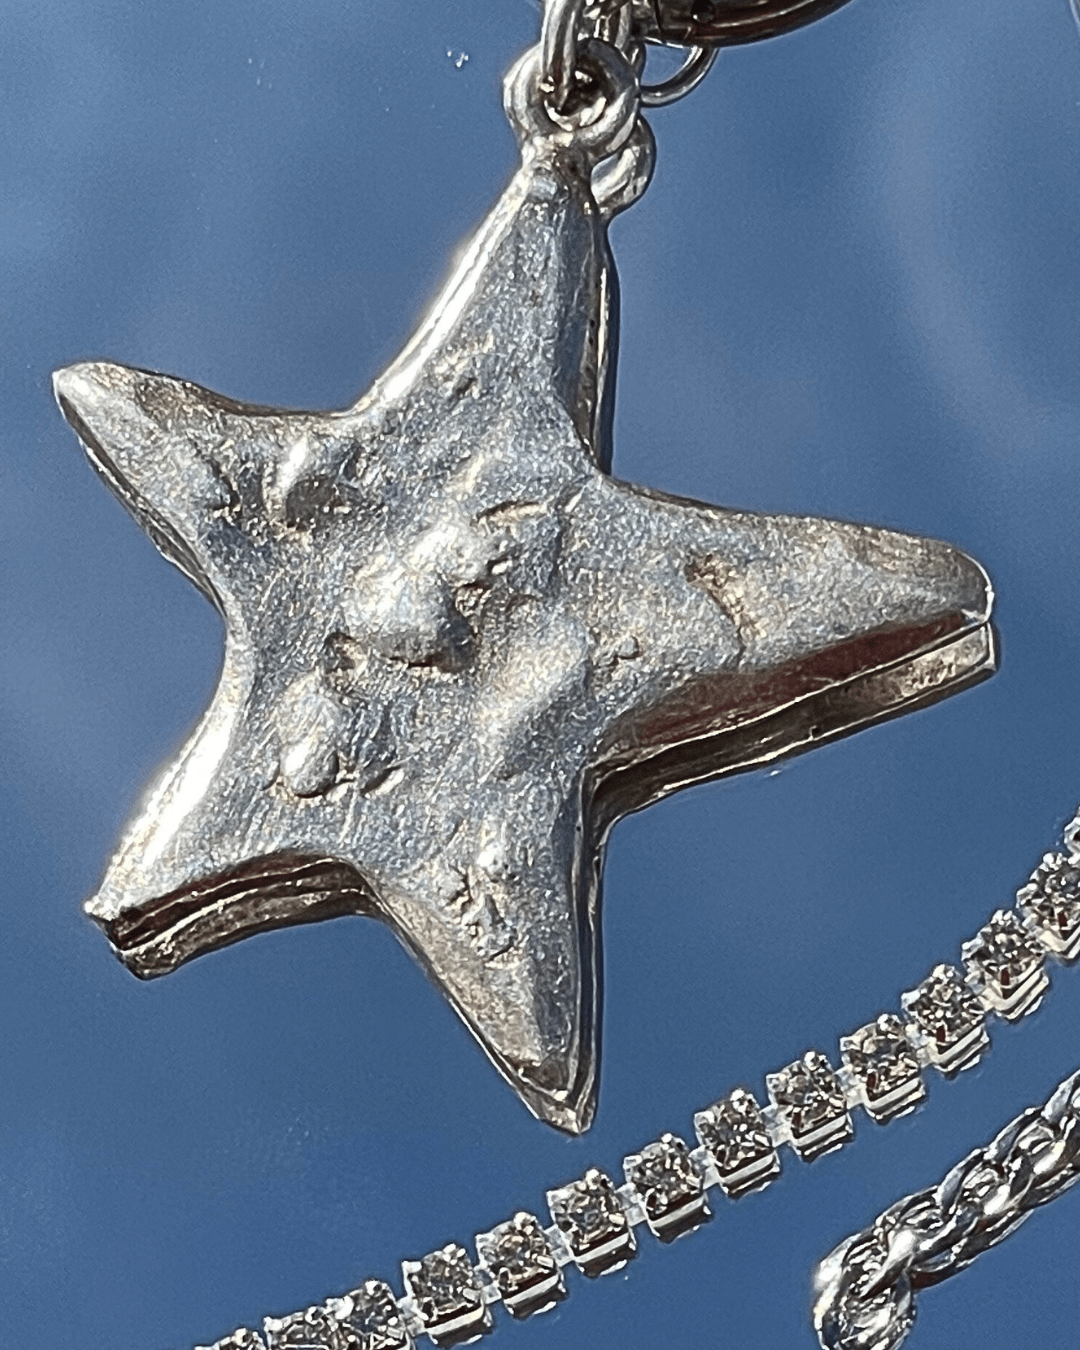 Boucles d'oreilles upcyclées - SILVER STAR